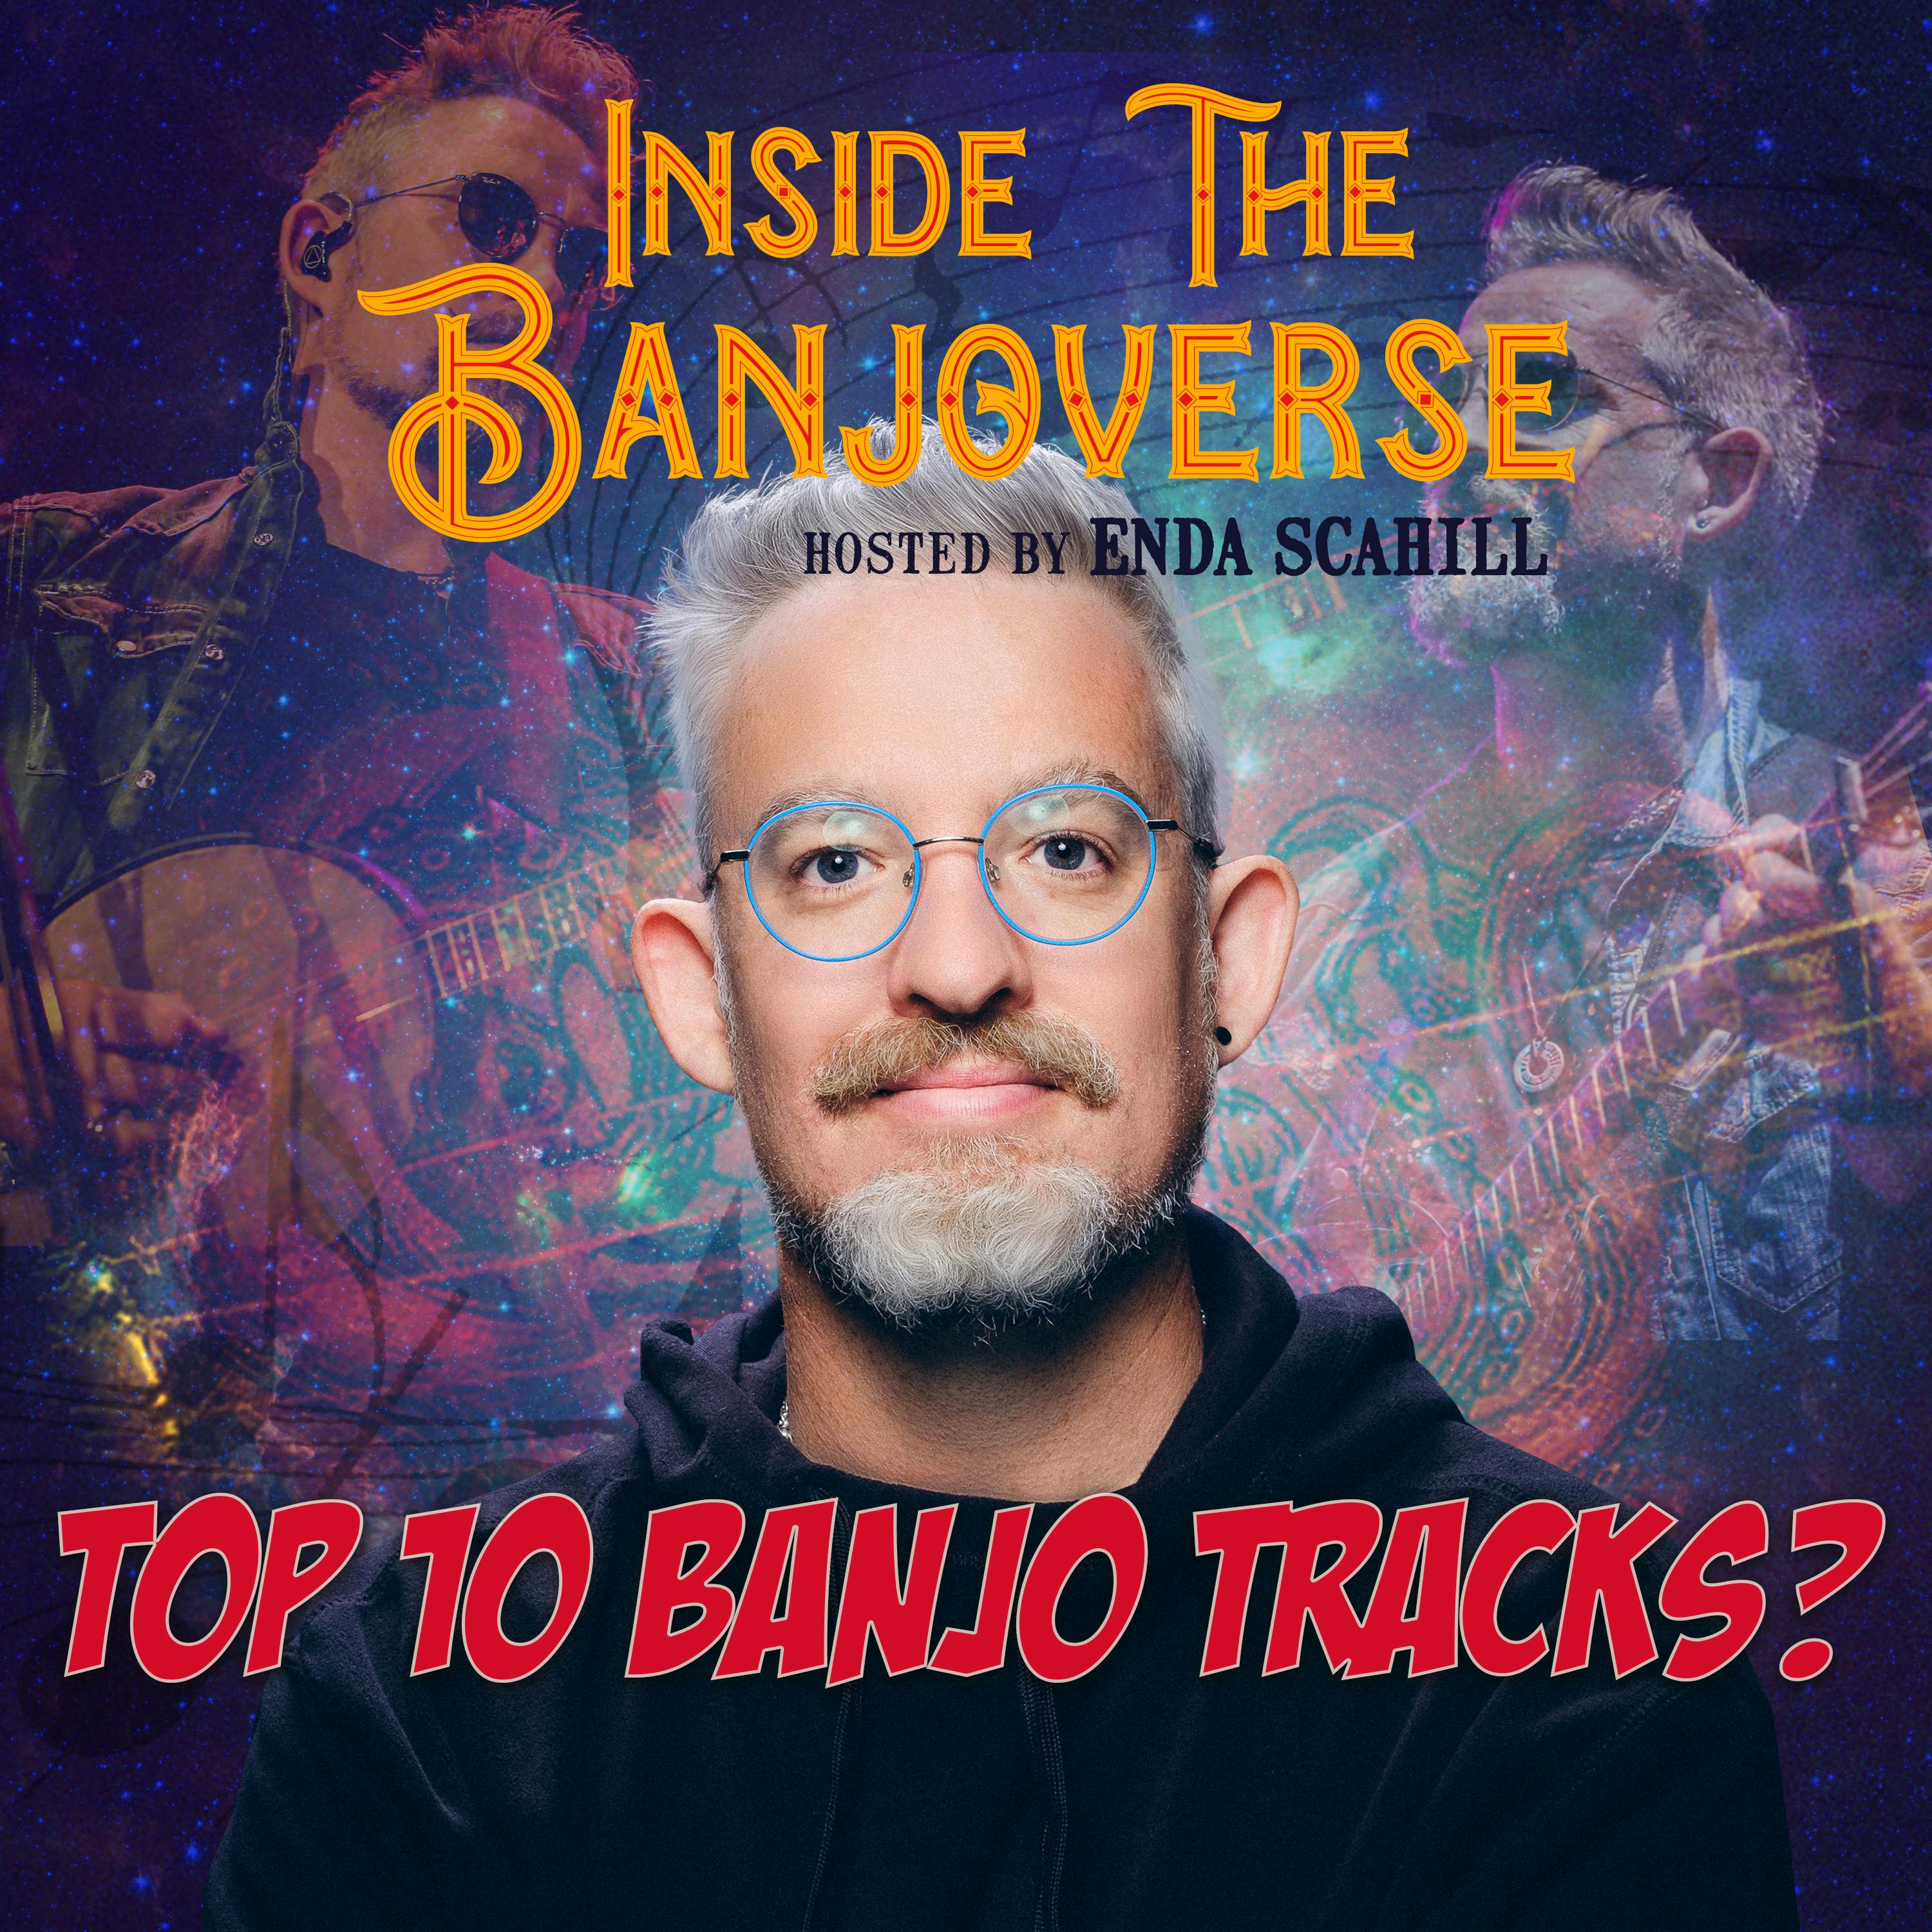 My Top Ten Banjo Tracks (The First Take!)